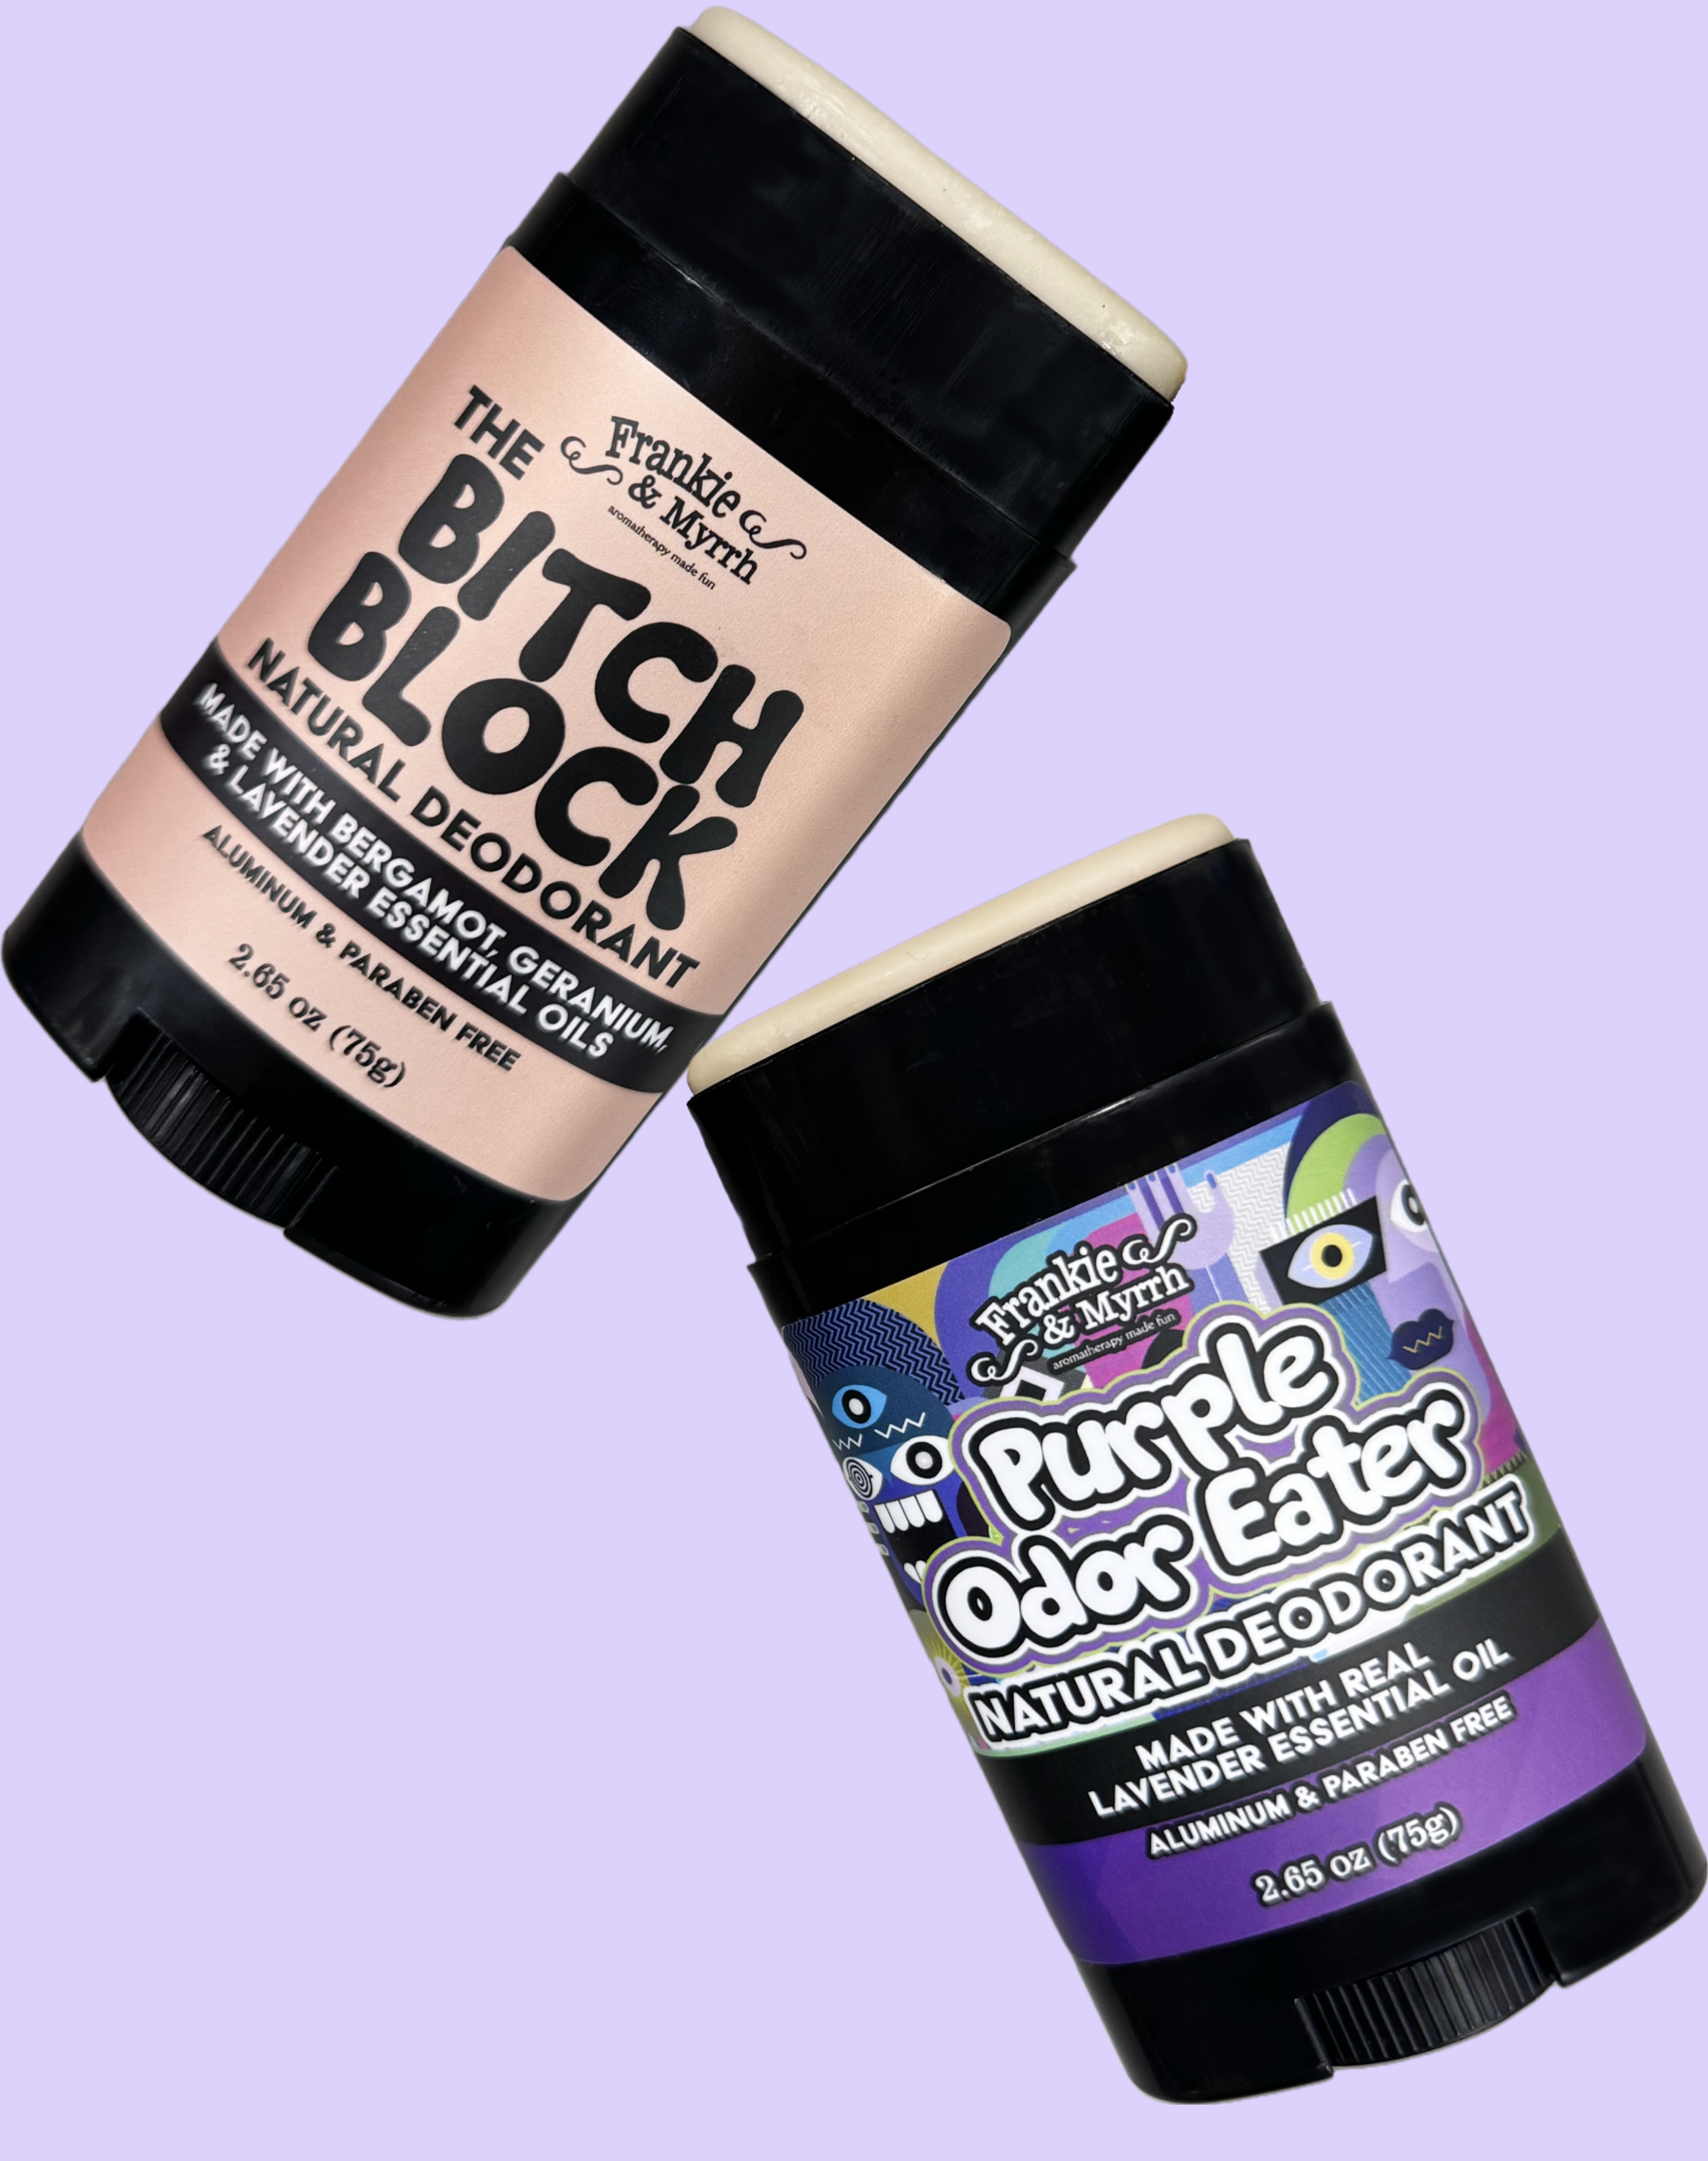 Dynamic Deo Duo Mix N' Match Lavender Deodorant 2 Pack  | Natural Deodorants | Lavender